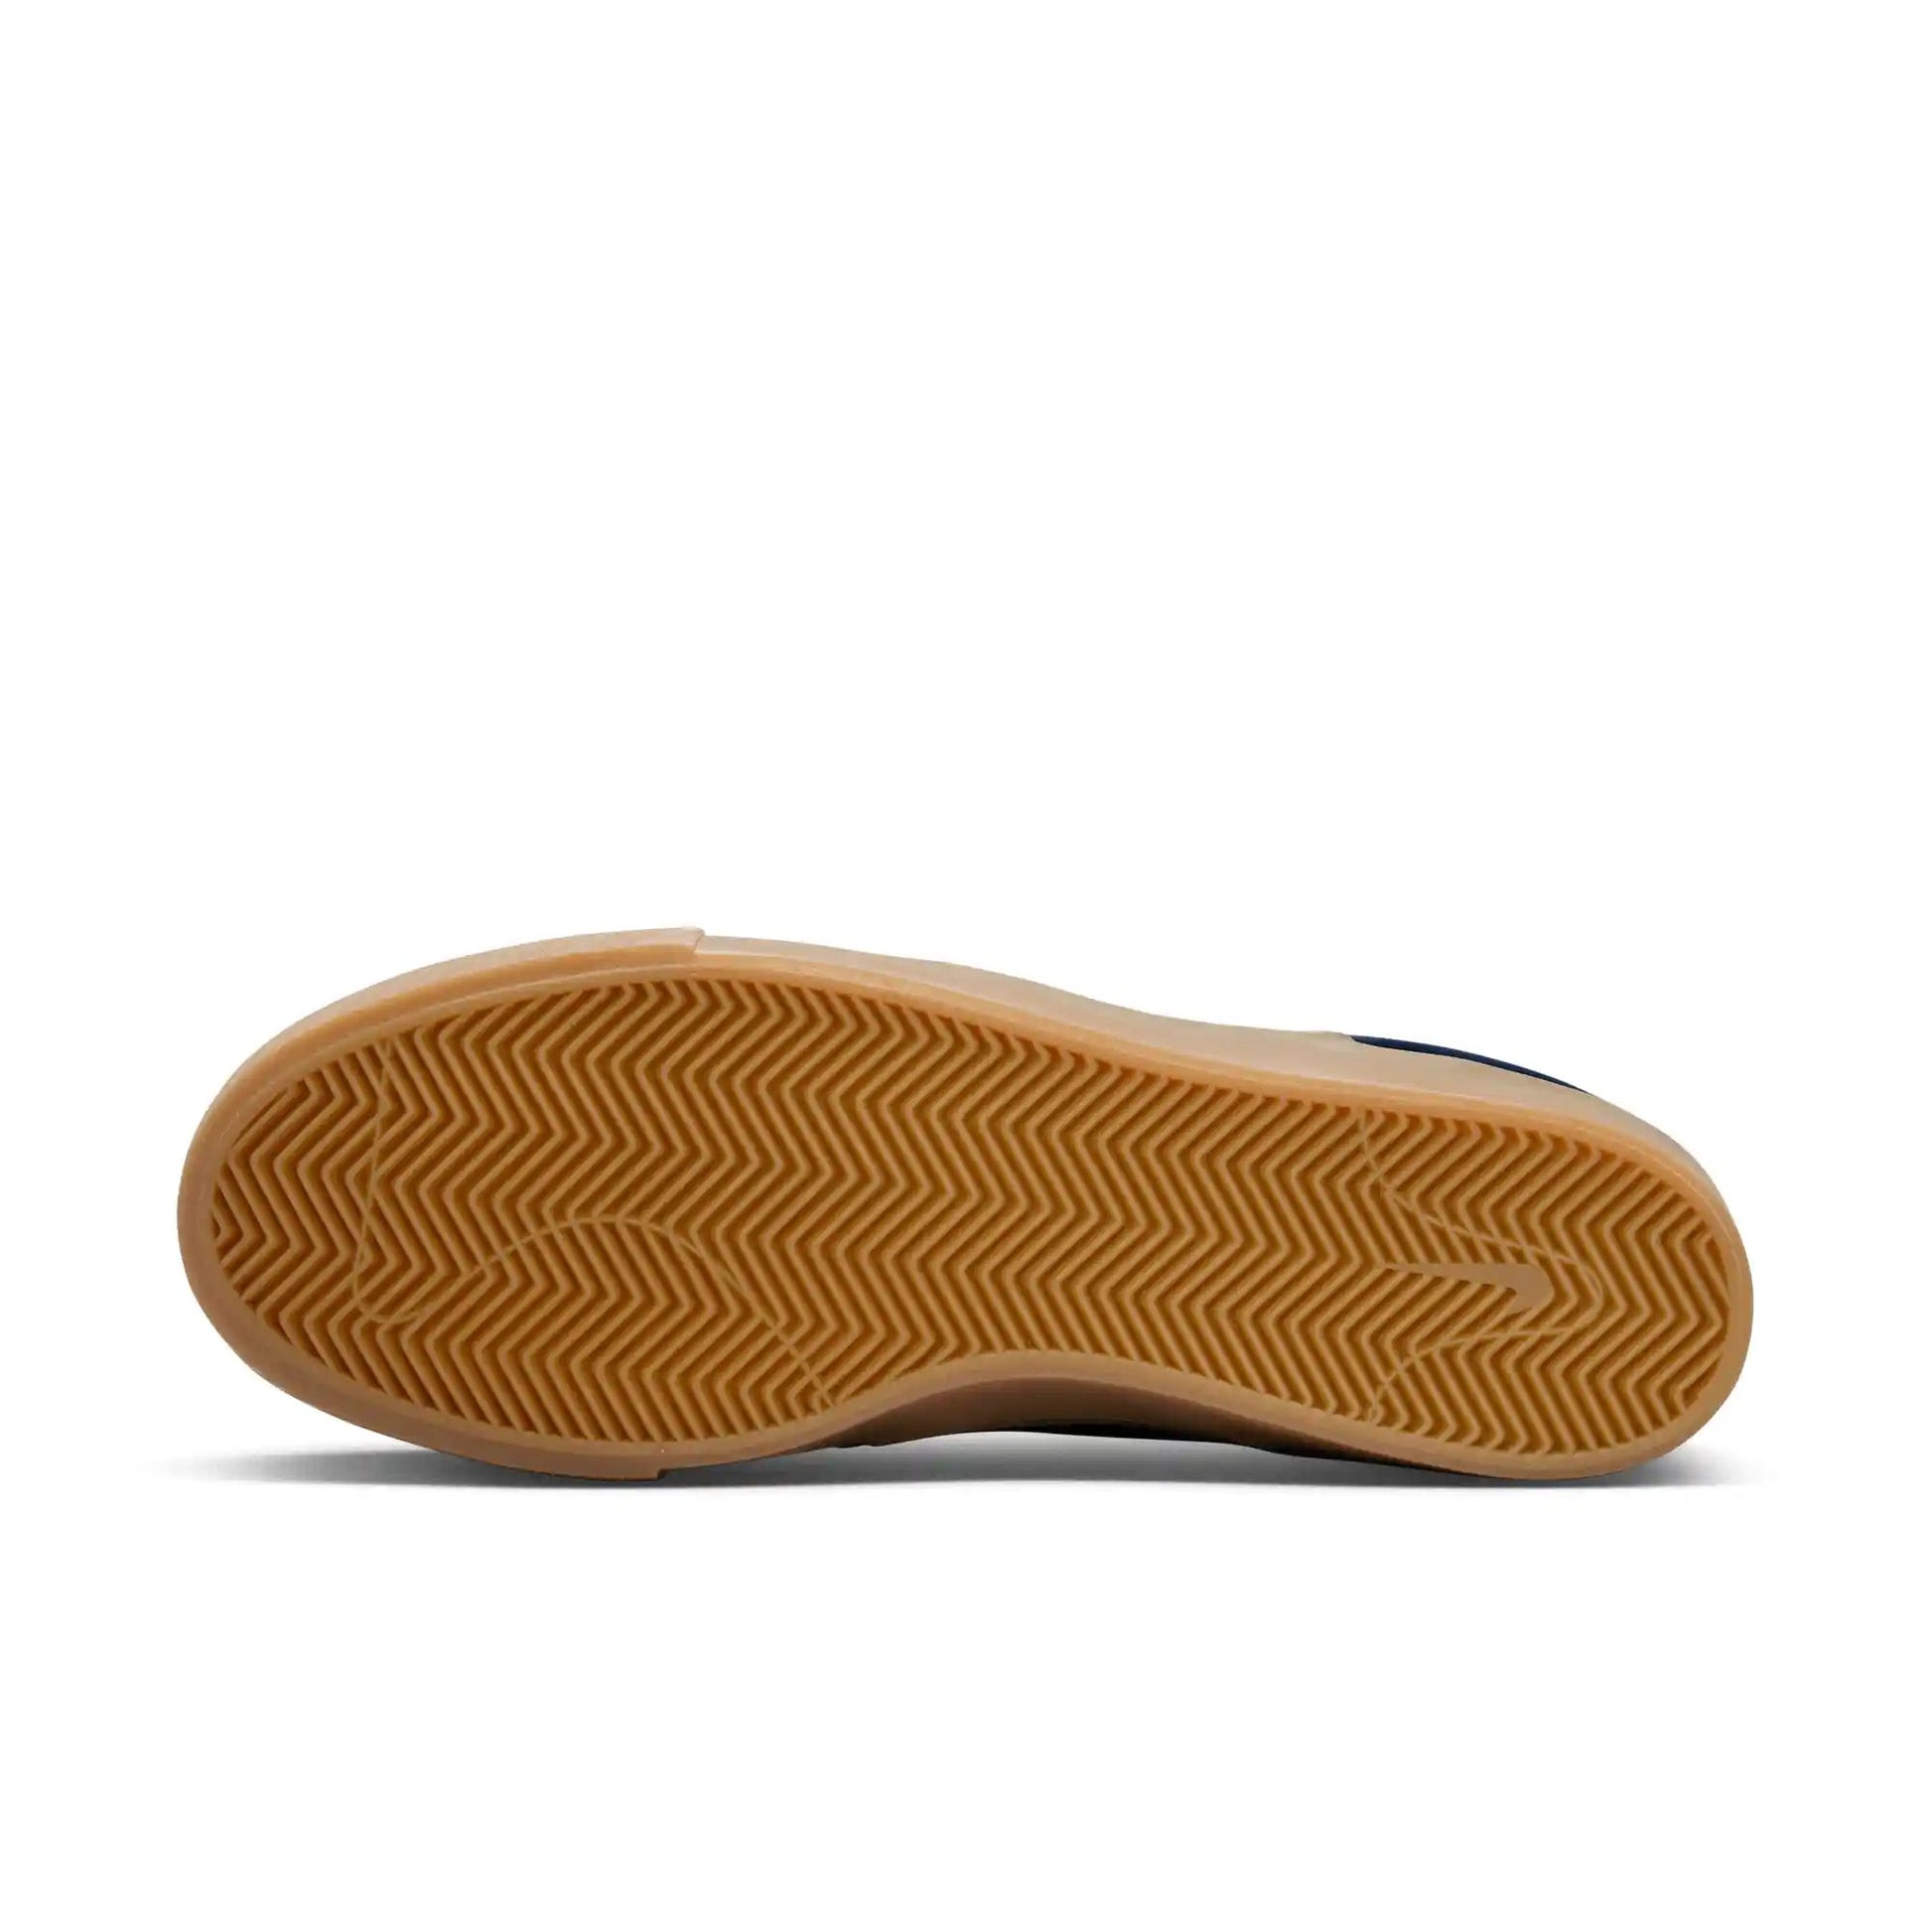 Nike SB Zoom Janoski OG+, navy/white-navy-gum light brown - Tiki Room Skateboards - 5